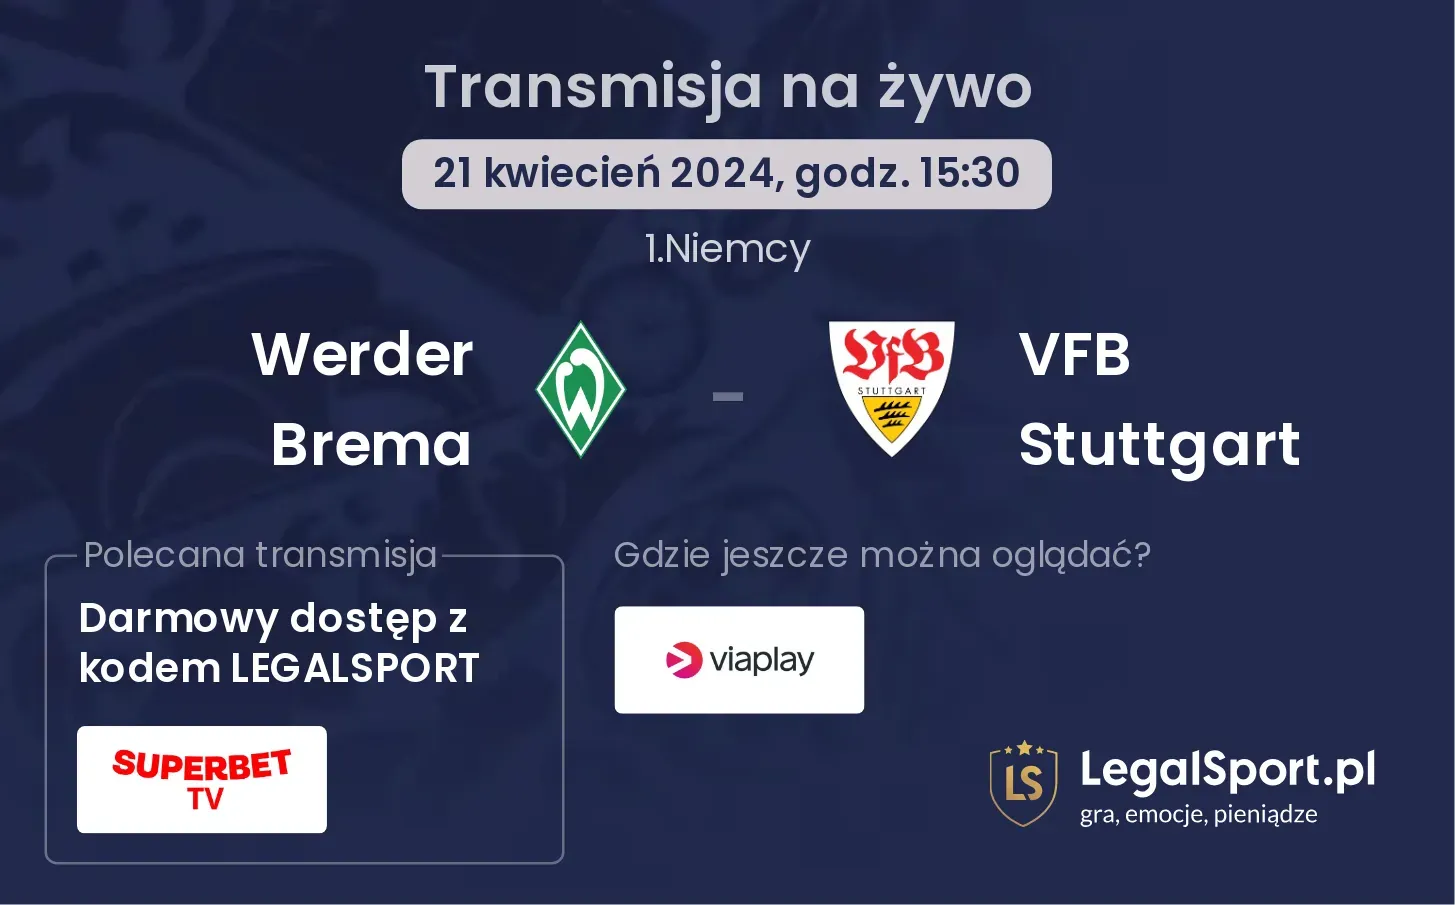 Werder Brema - VFB Stuttgart transmisja na żywo